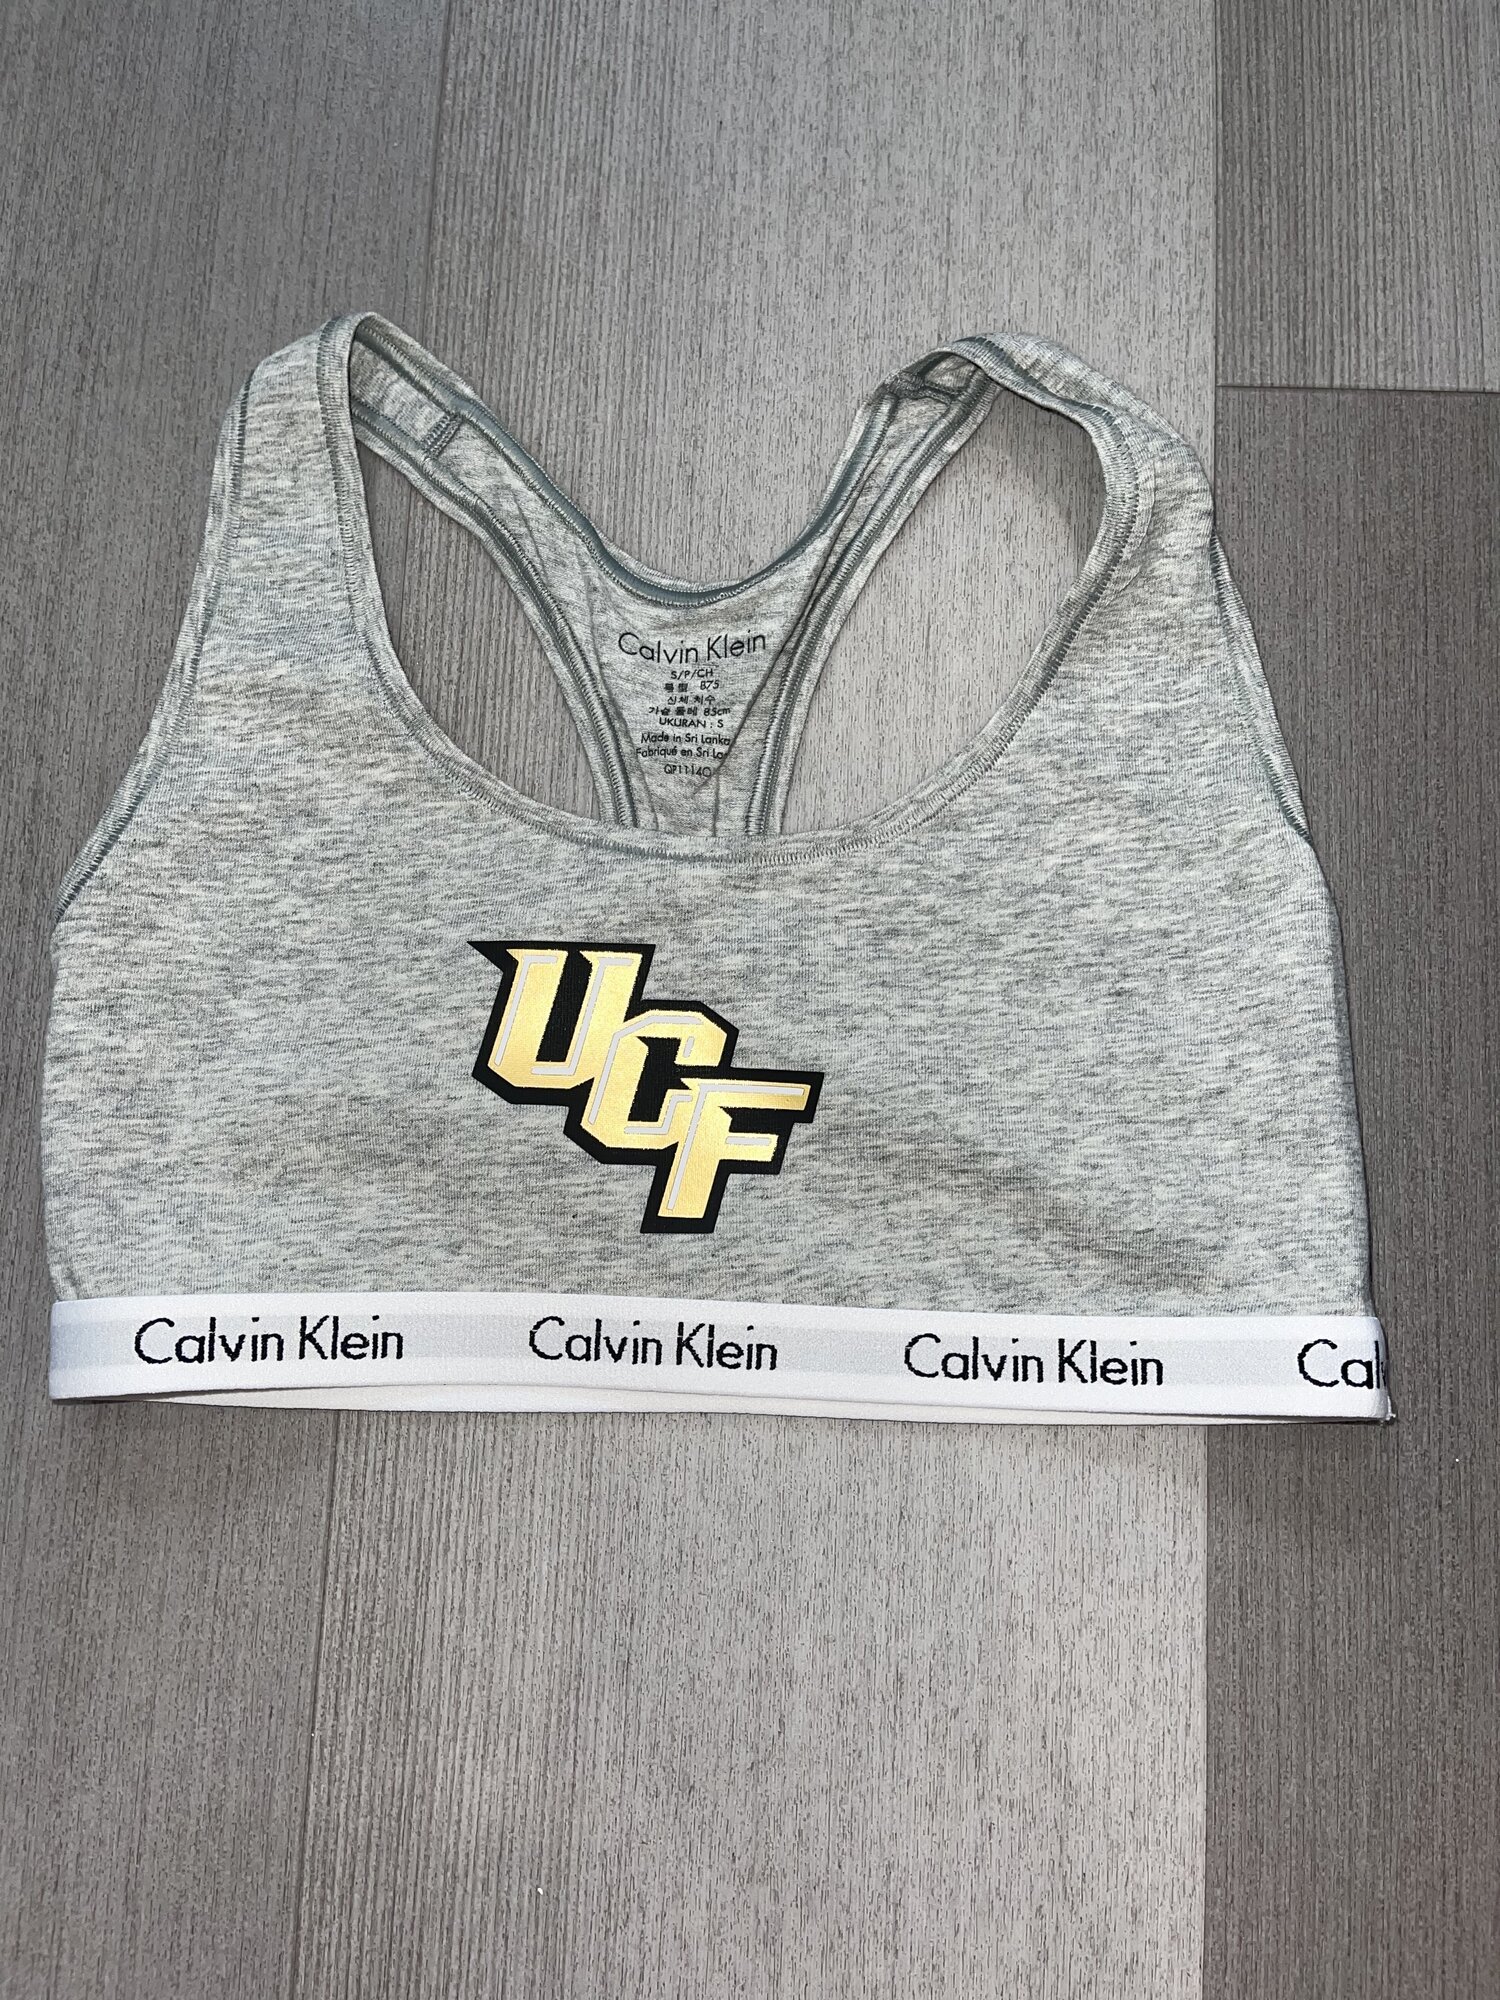 Calvin Klein Custom bra for University of Central Florida (UCF) -Sample  Size Small — 